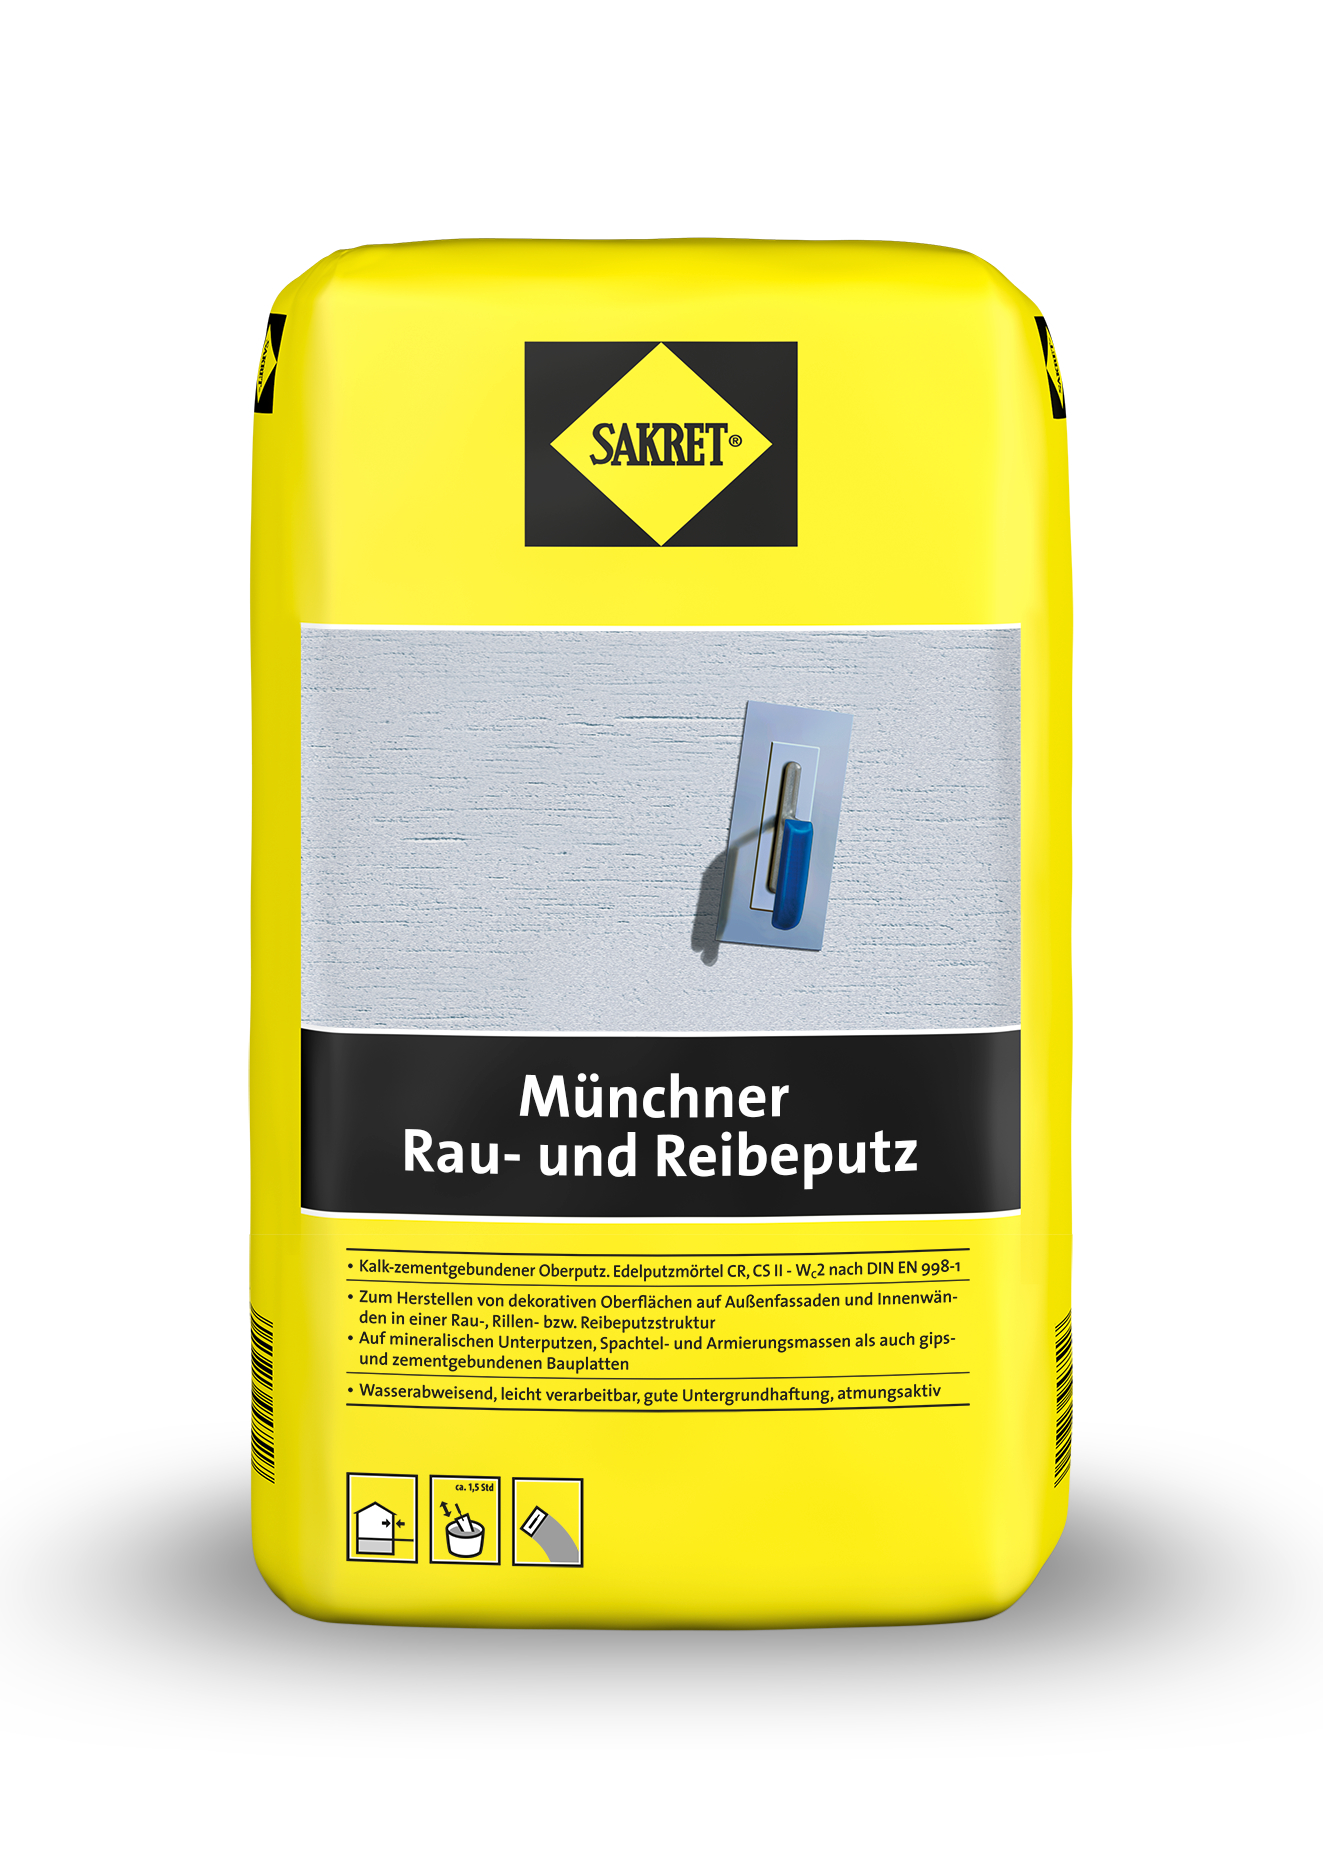 SAKRET Münchner Rauhputz 2 mm 25 kg 